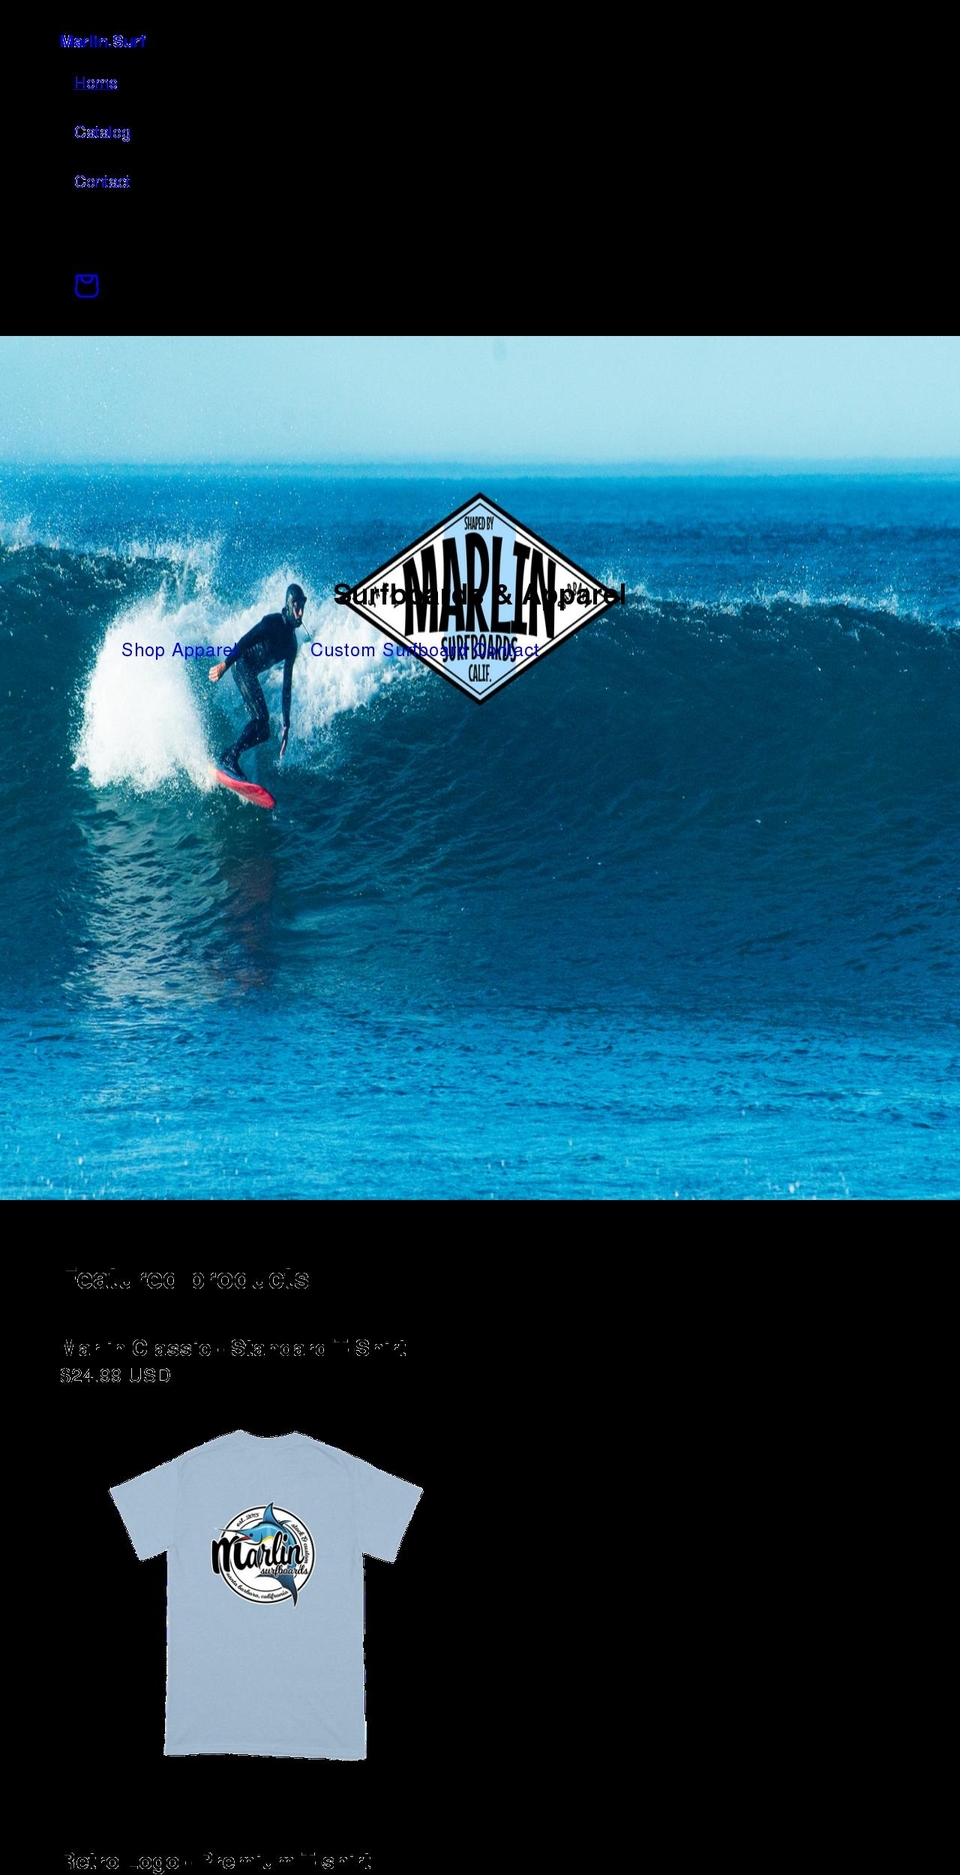 marlin.surf shopify website screenshot